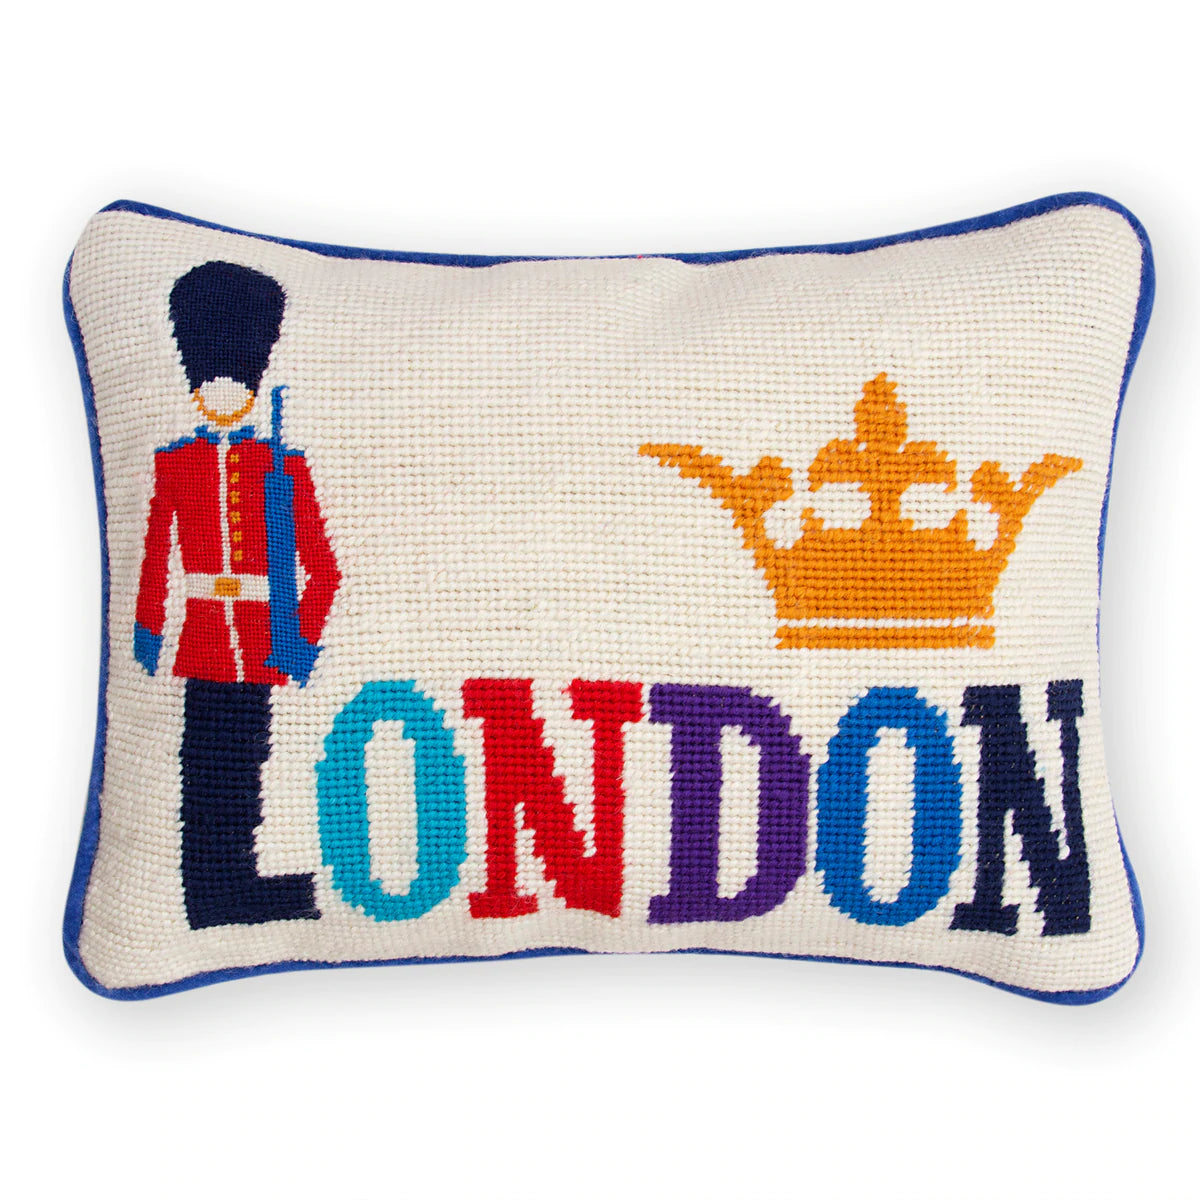 Jet Set London Pillow by Jonathan Adler